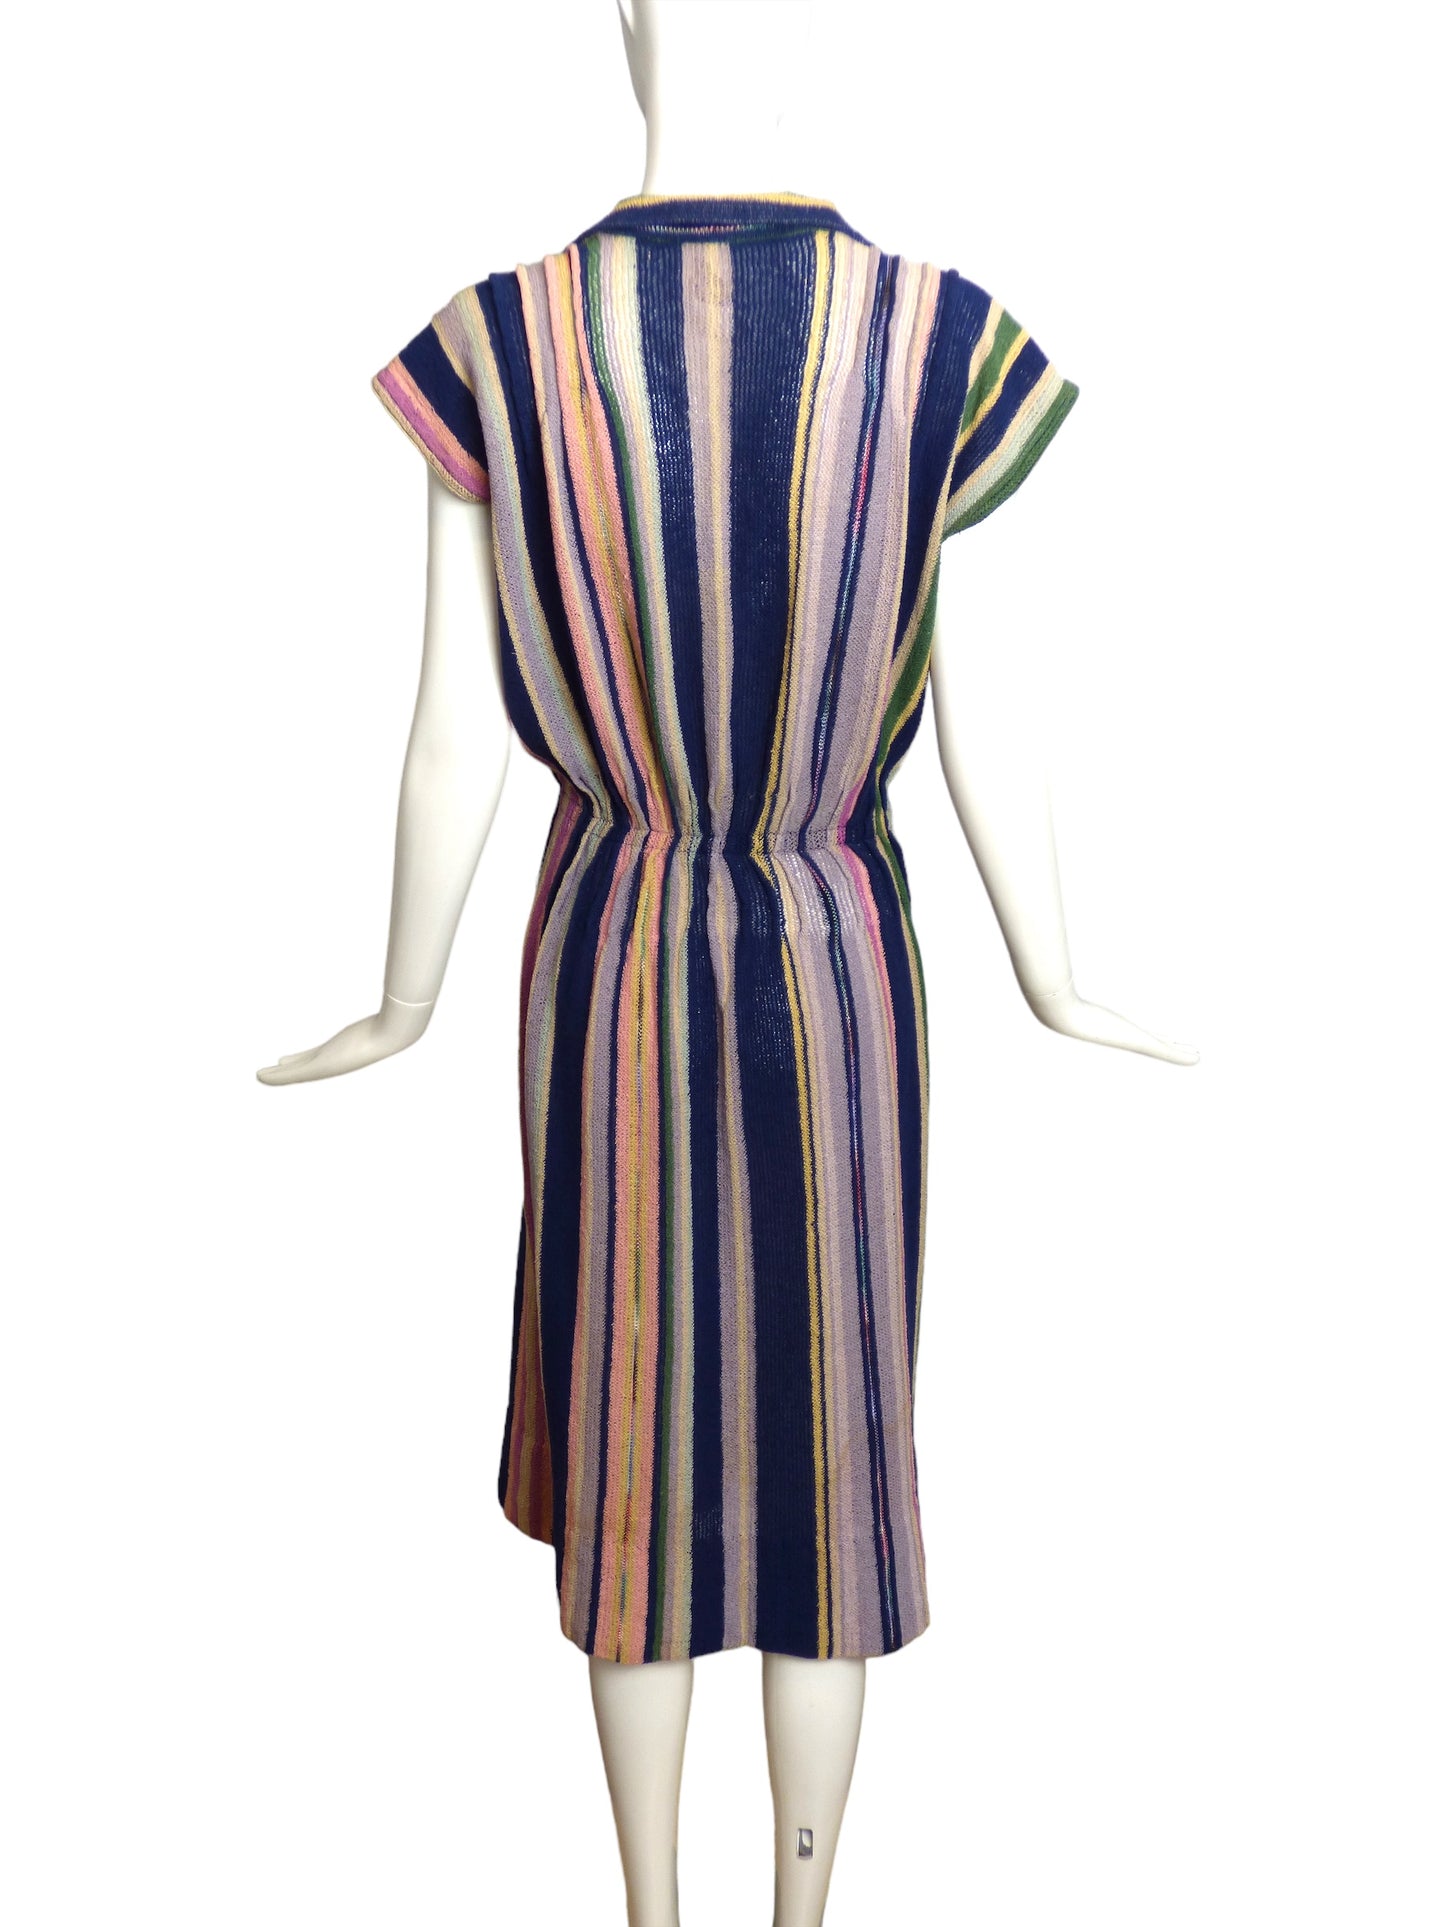 MISSONI- 1970s Striped Sweater Knit Dress, Size 8